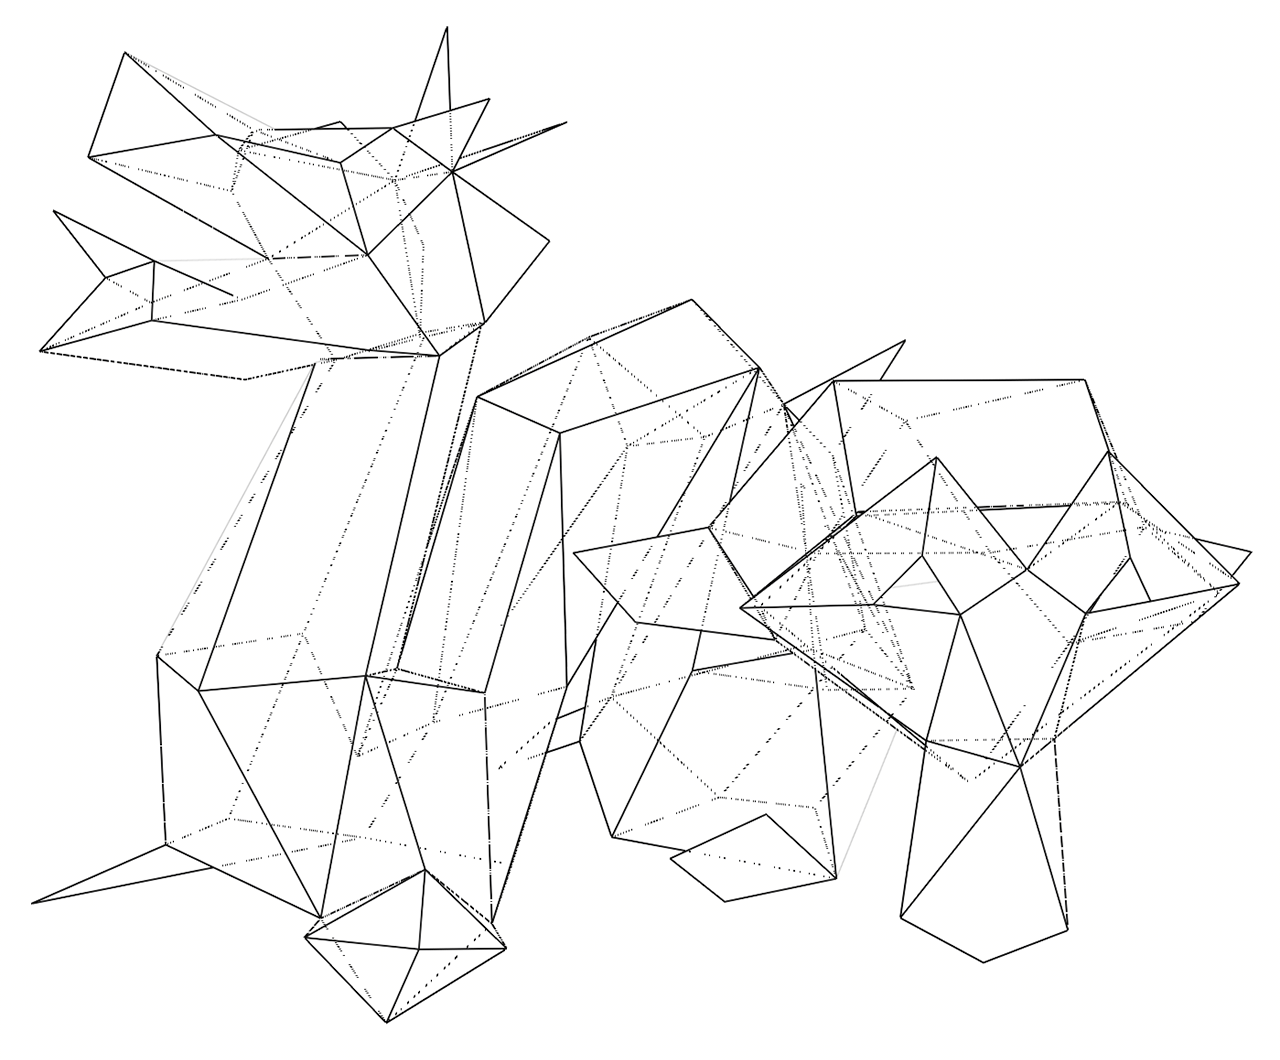 Geometry: 126 vertices, 241 edges, 114 faces